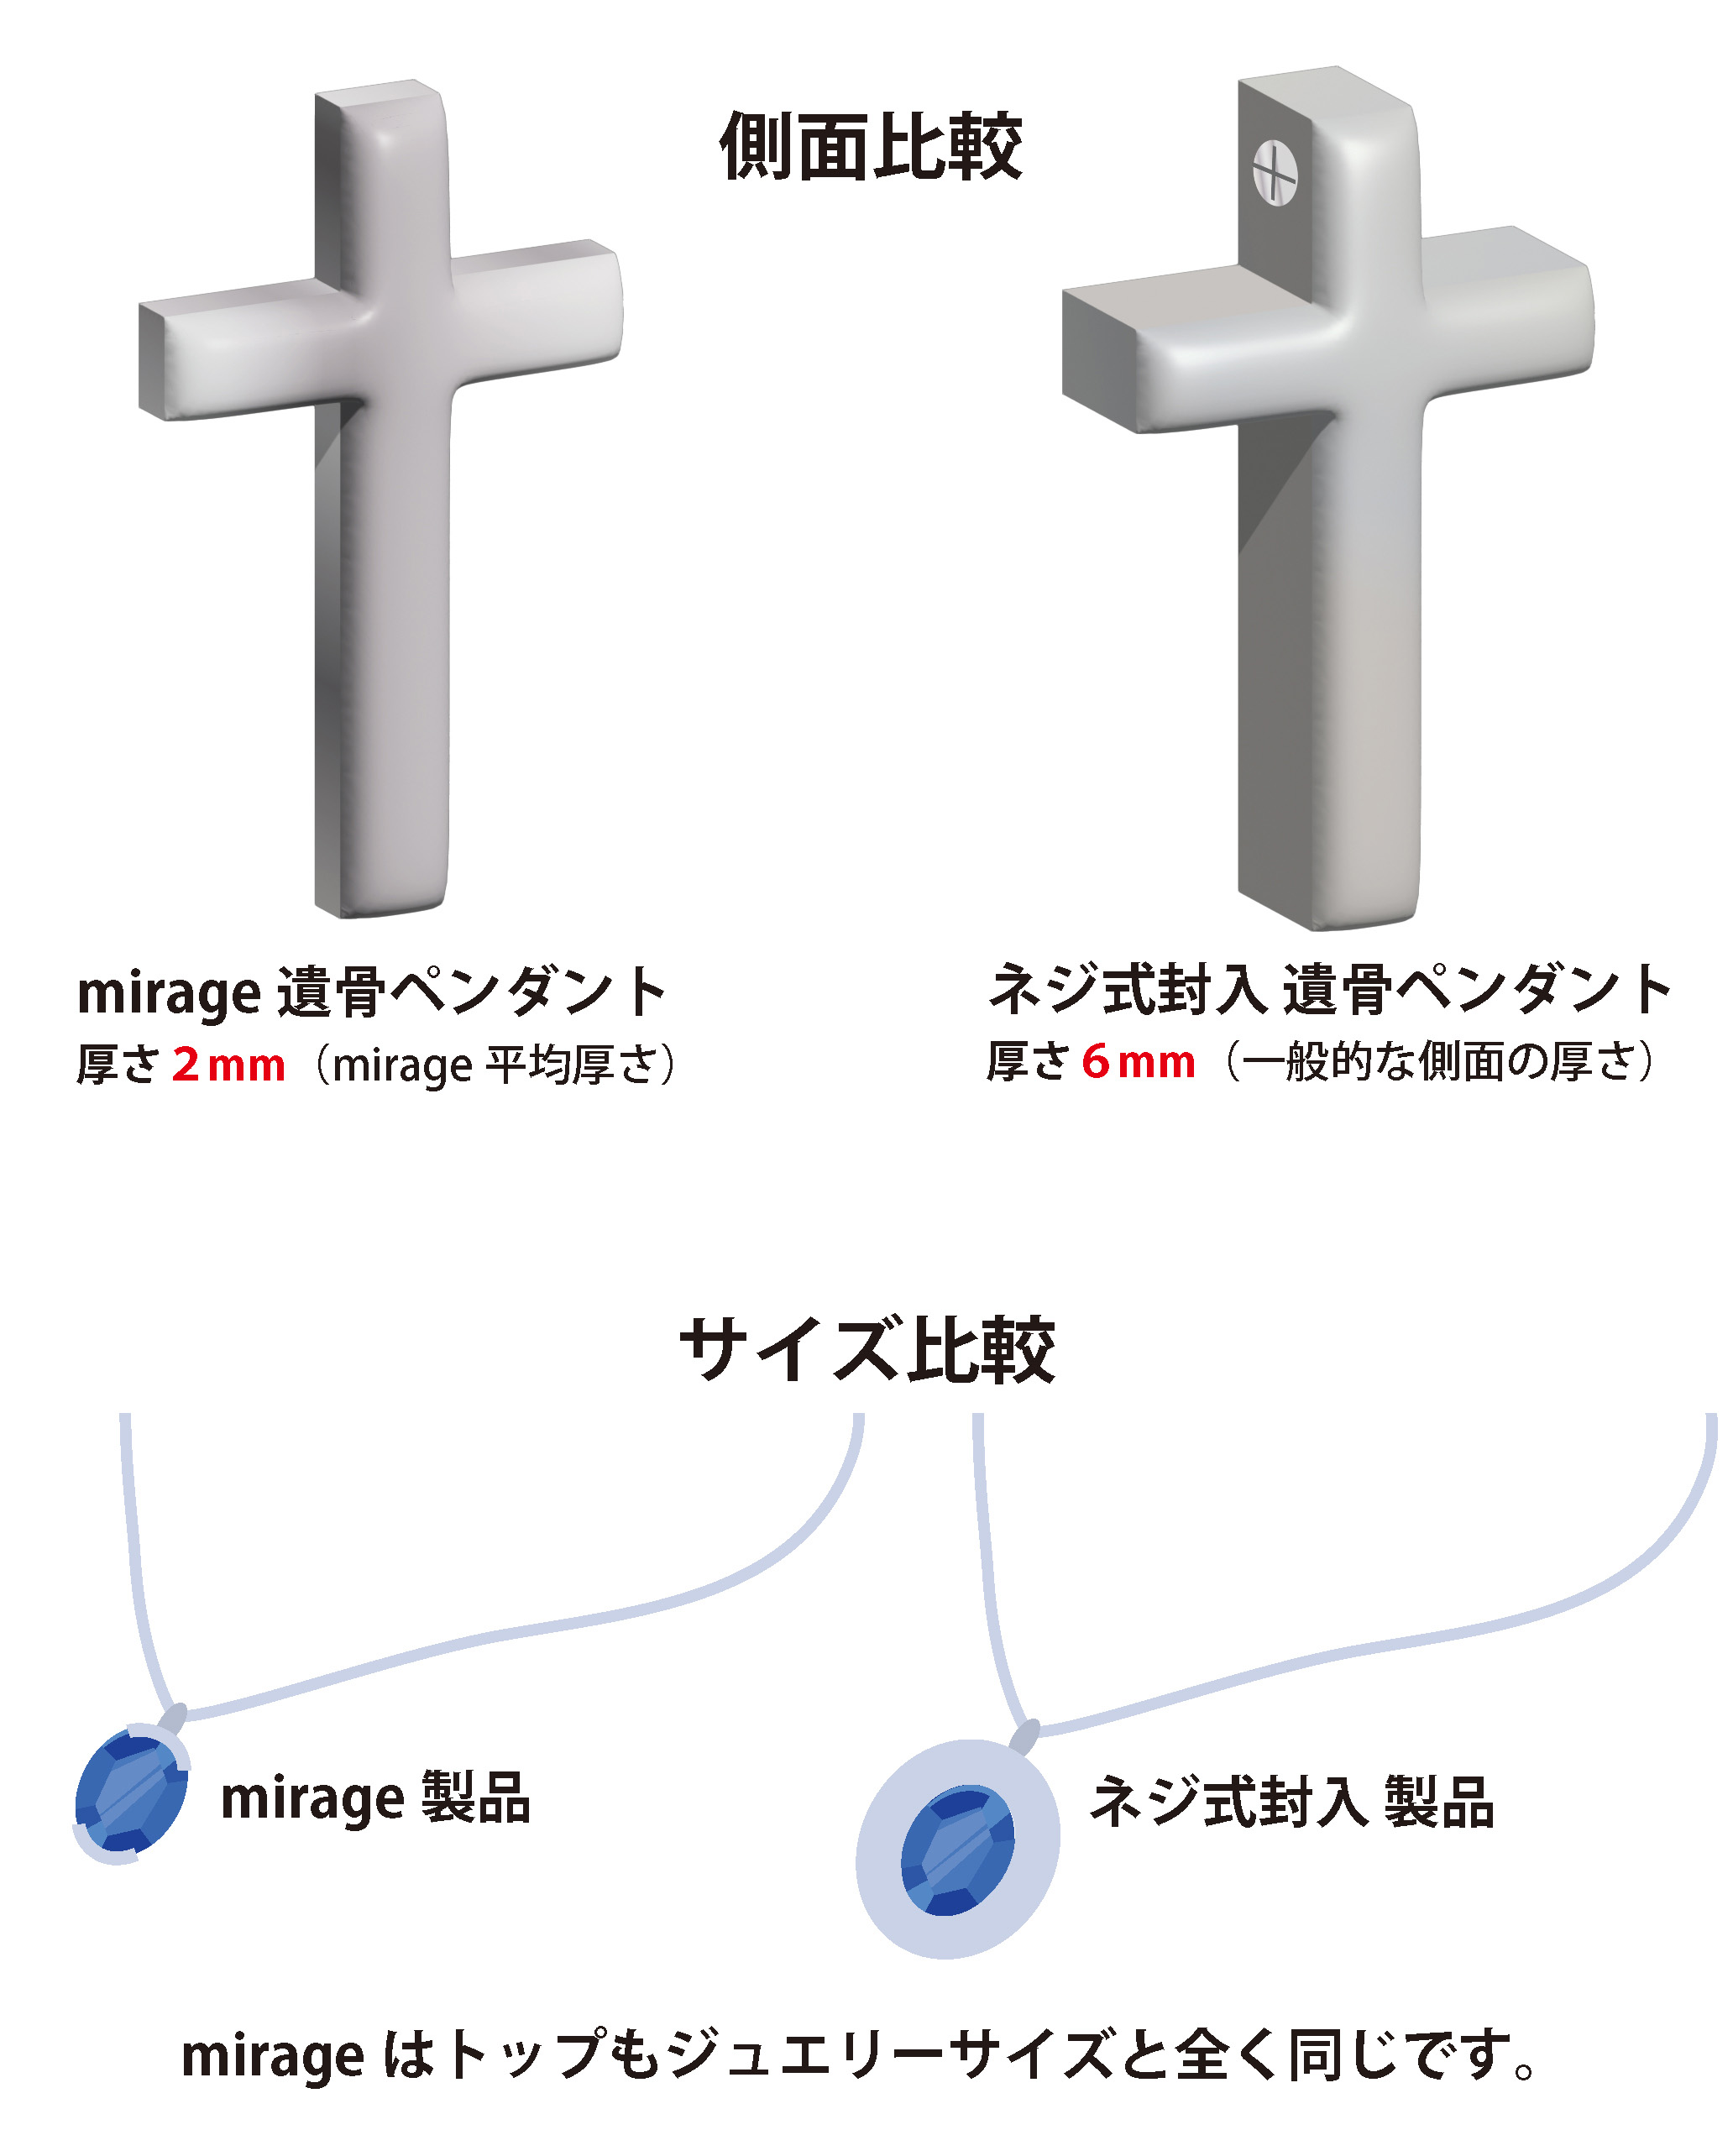 mirage製品とネジ式封入製品の違い